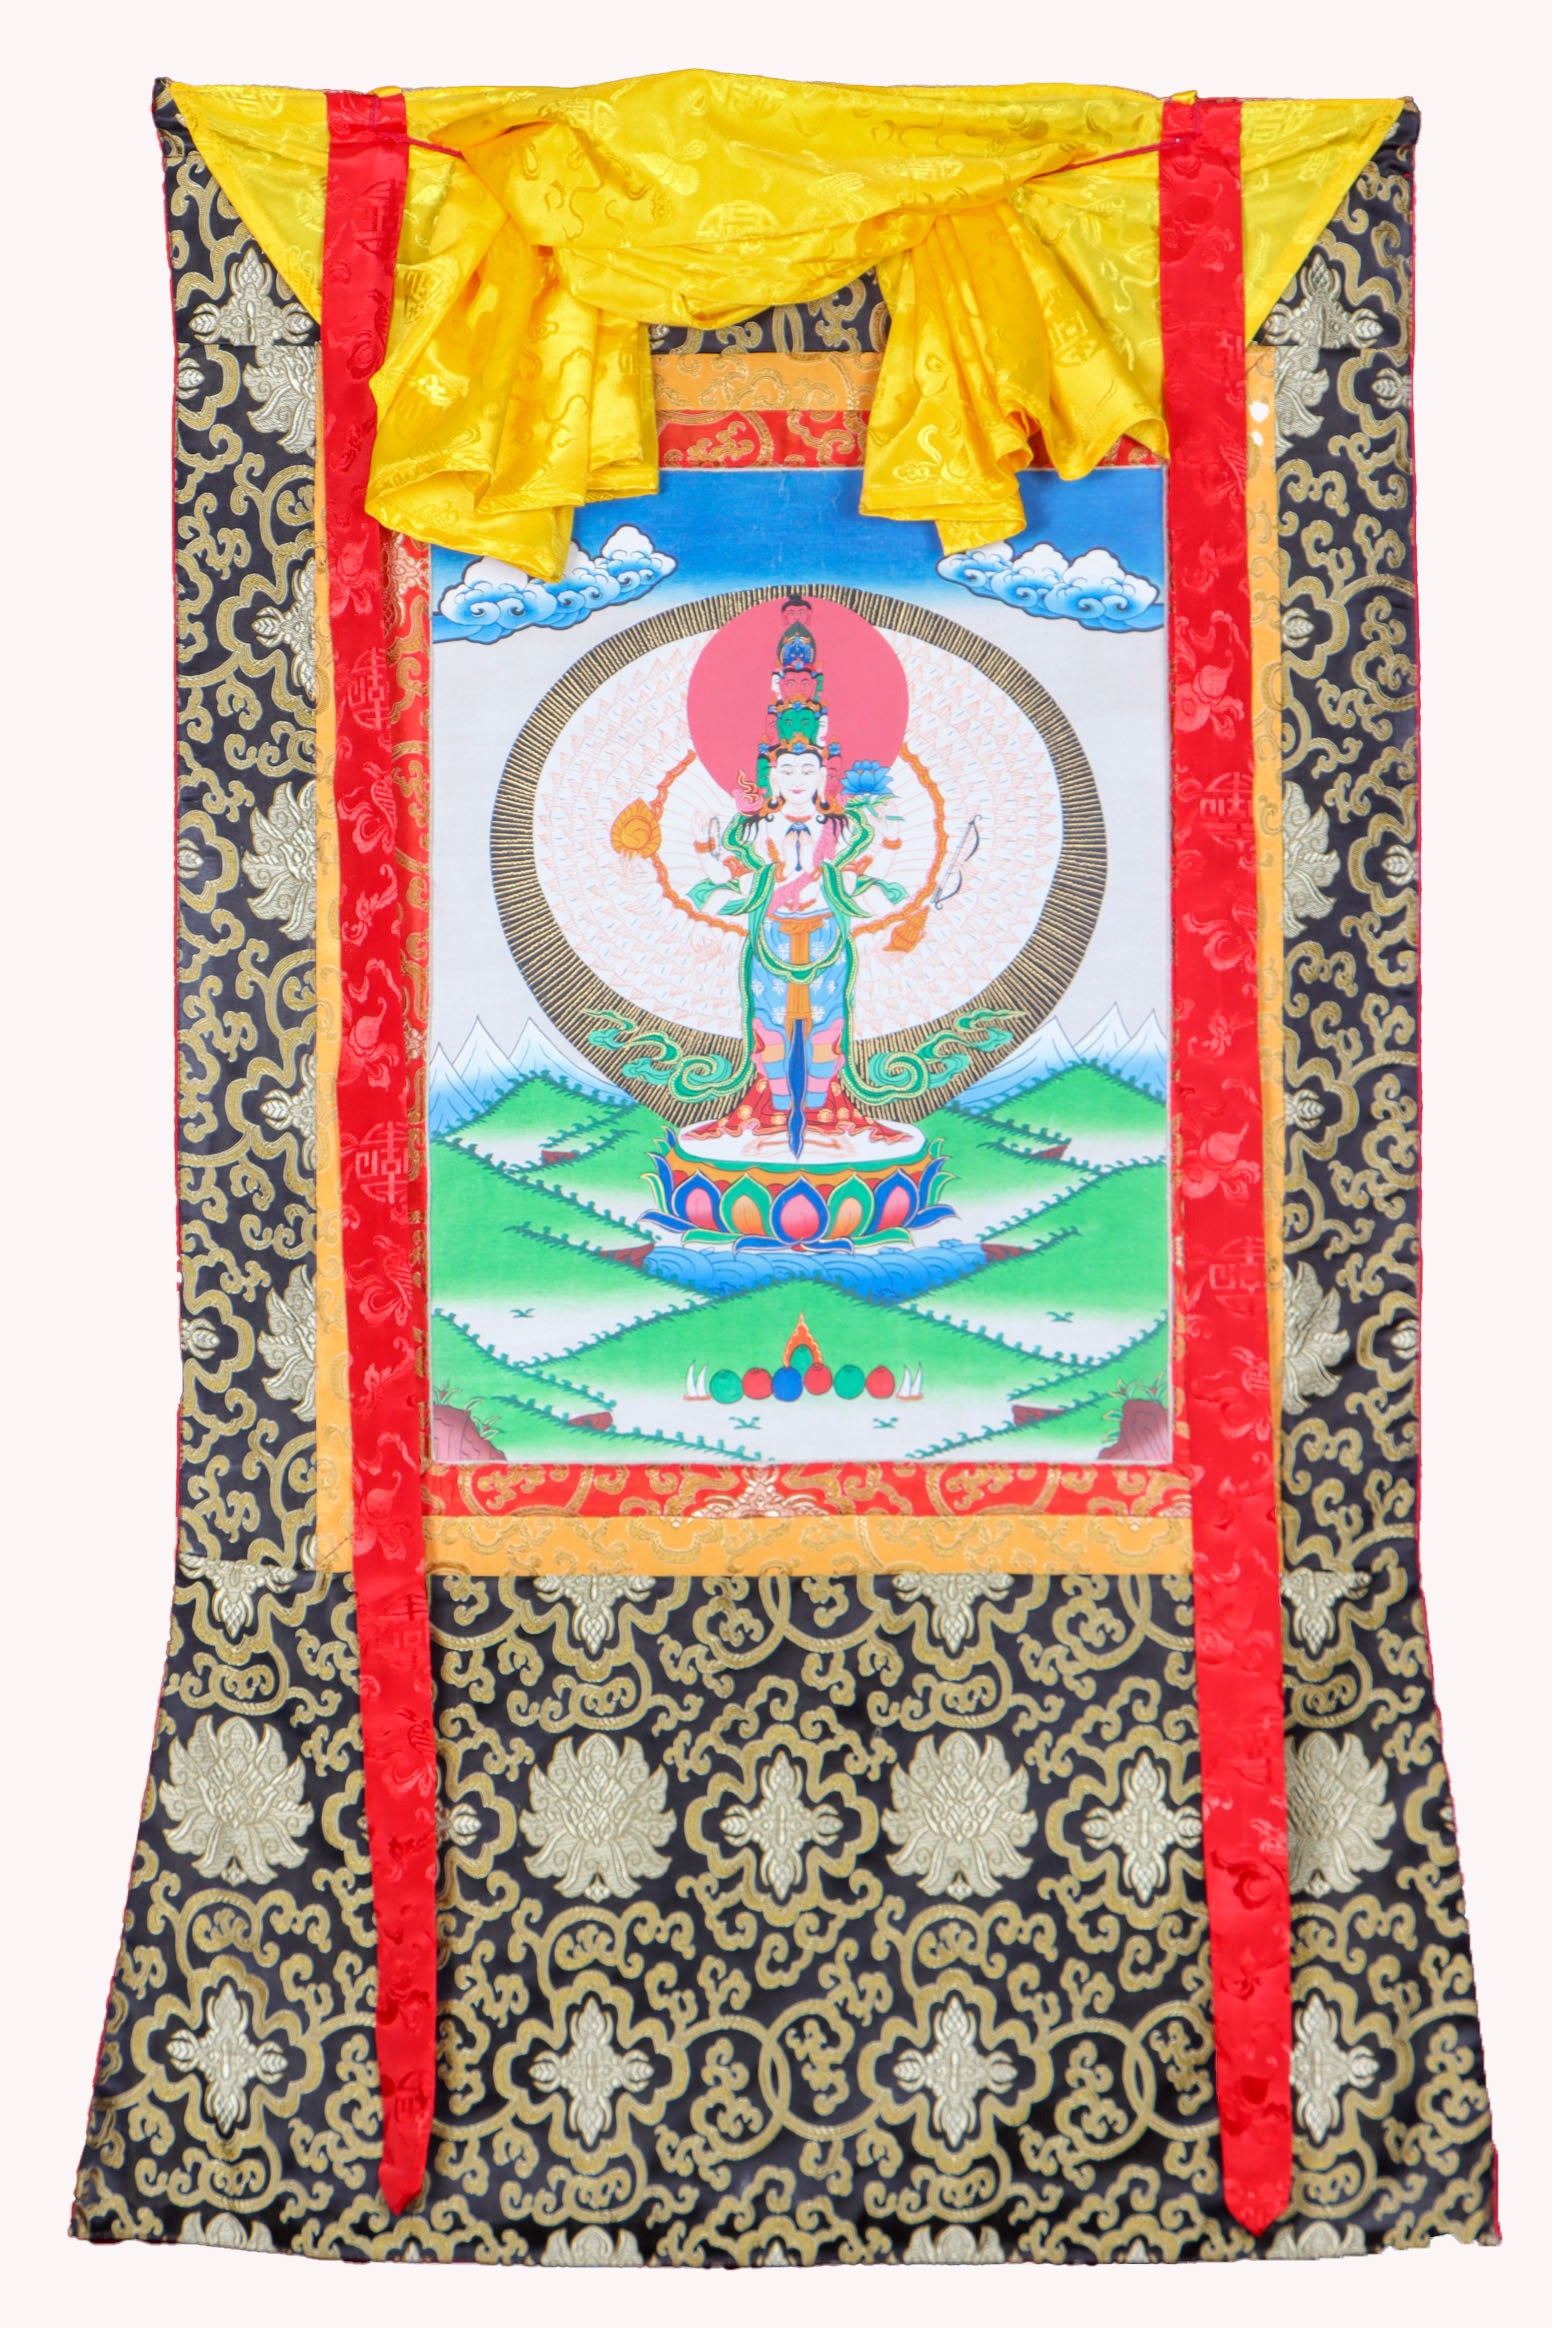 Avalokiteshvara Brocade Thangka Painting for prayer and devotion.